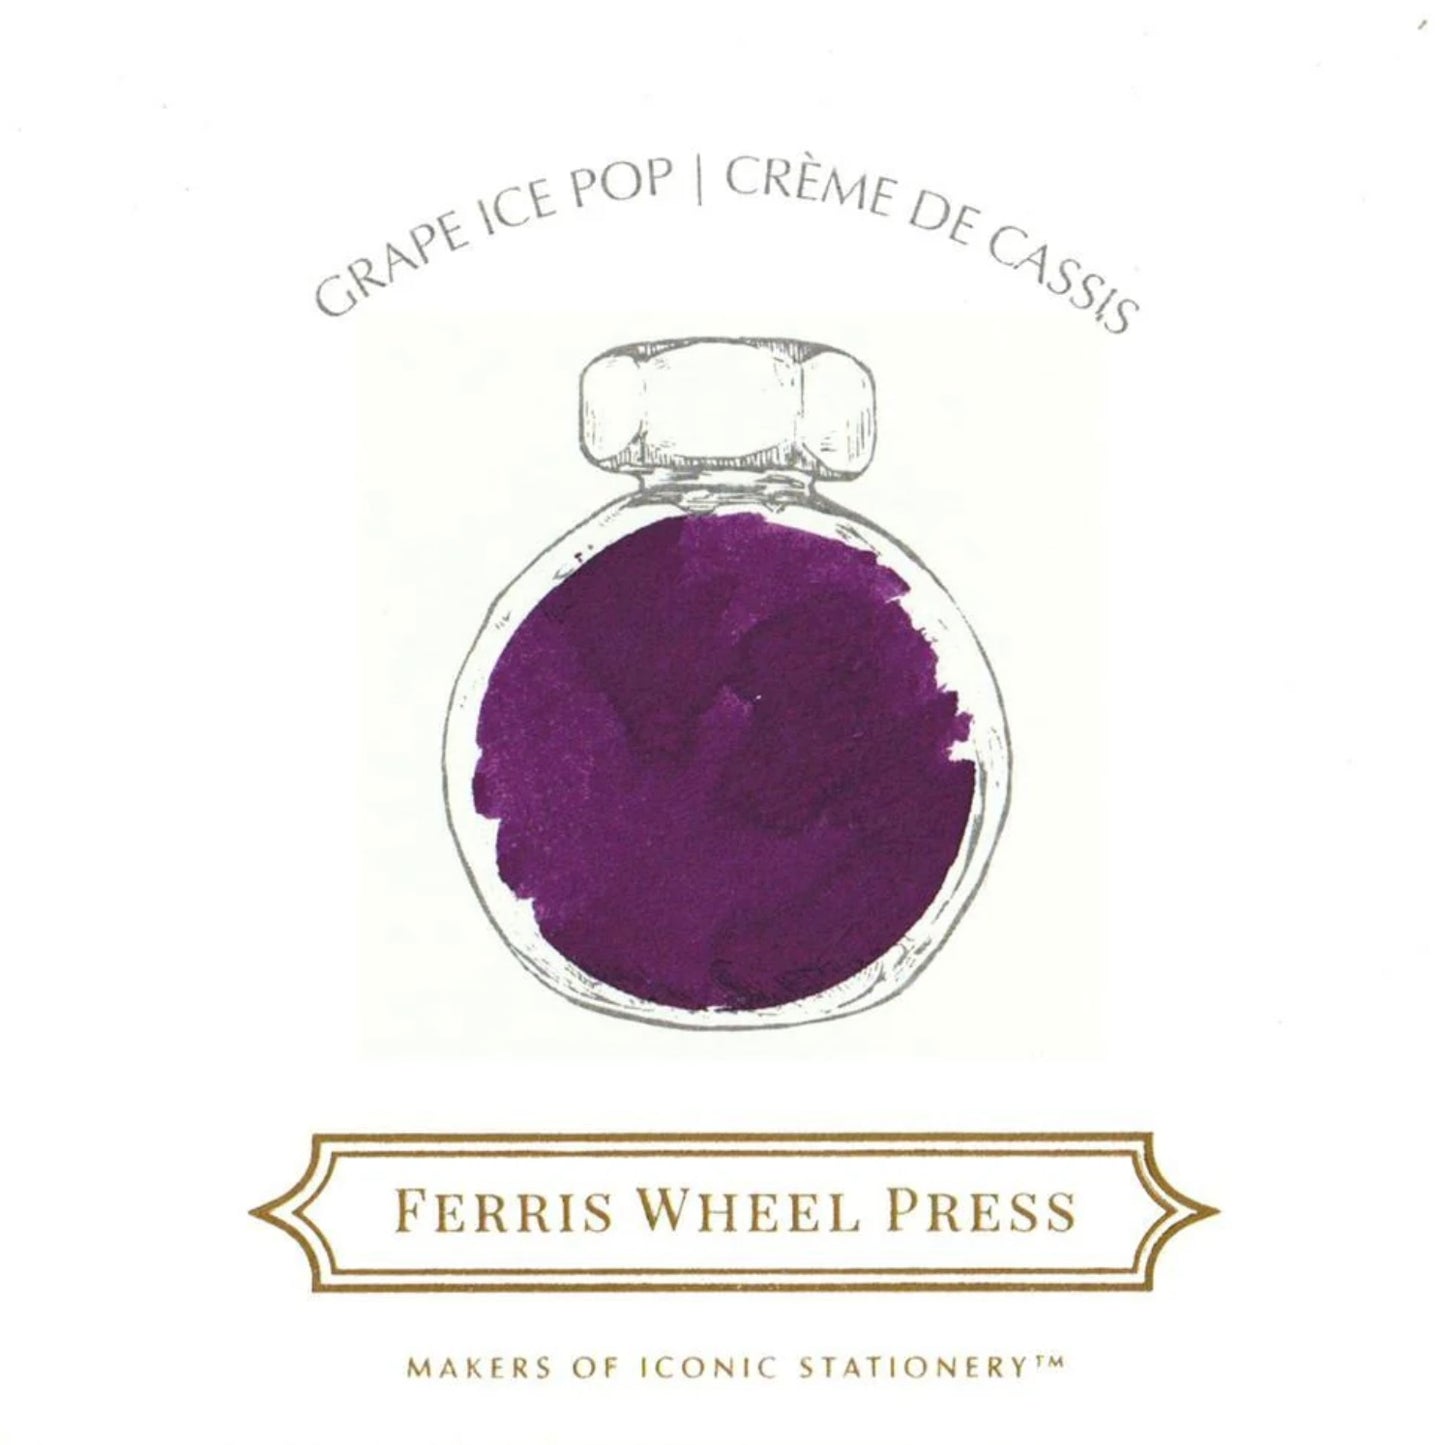 Ferris Wheel Press Grape Ice Pop